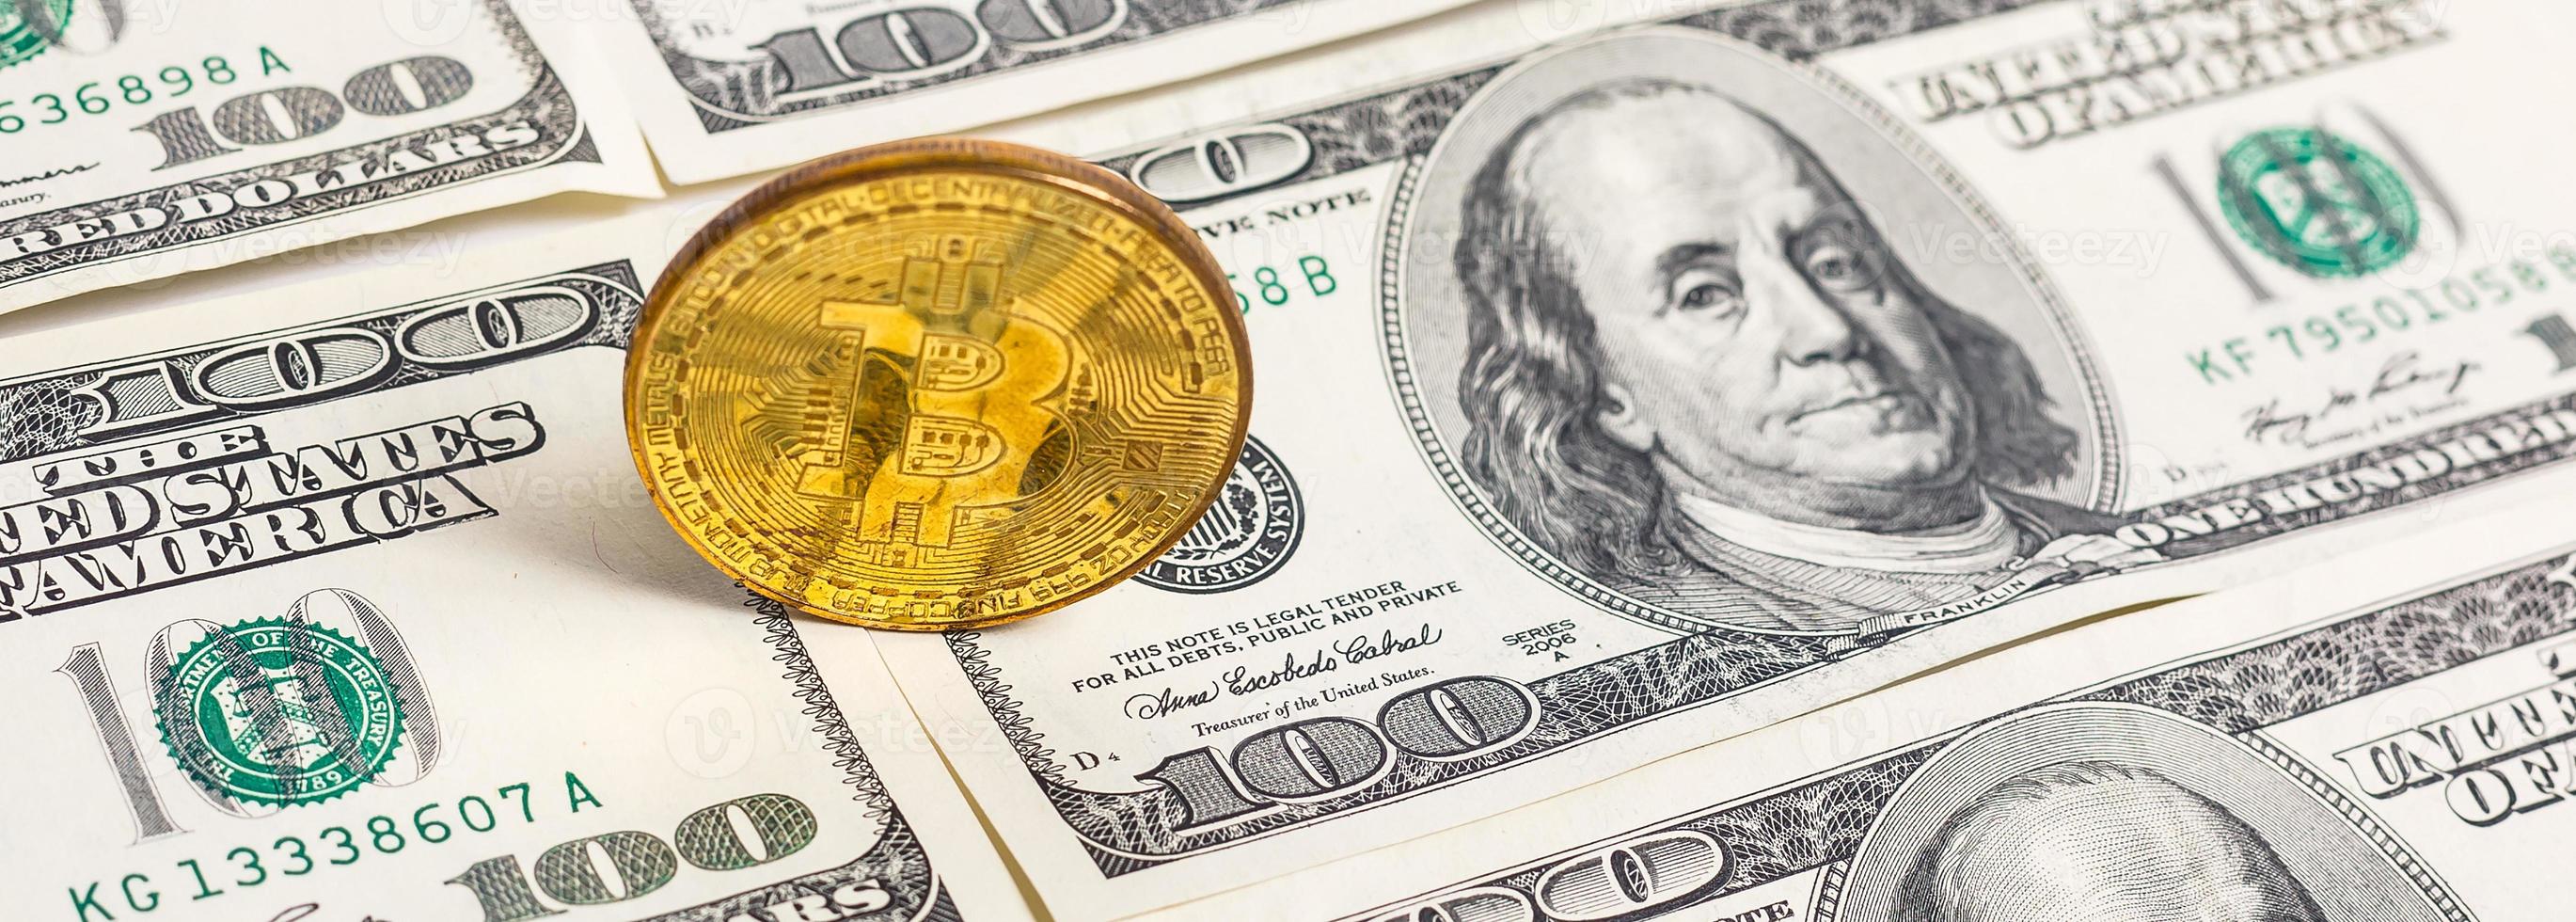 Golden bitcoin coin on us dollars close up photo